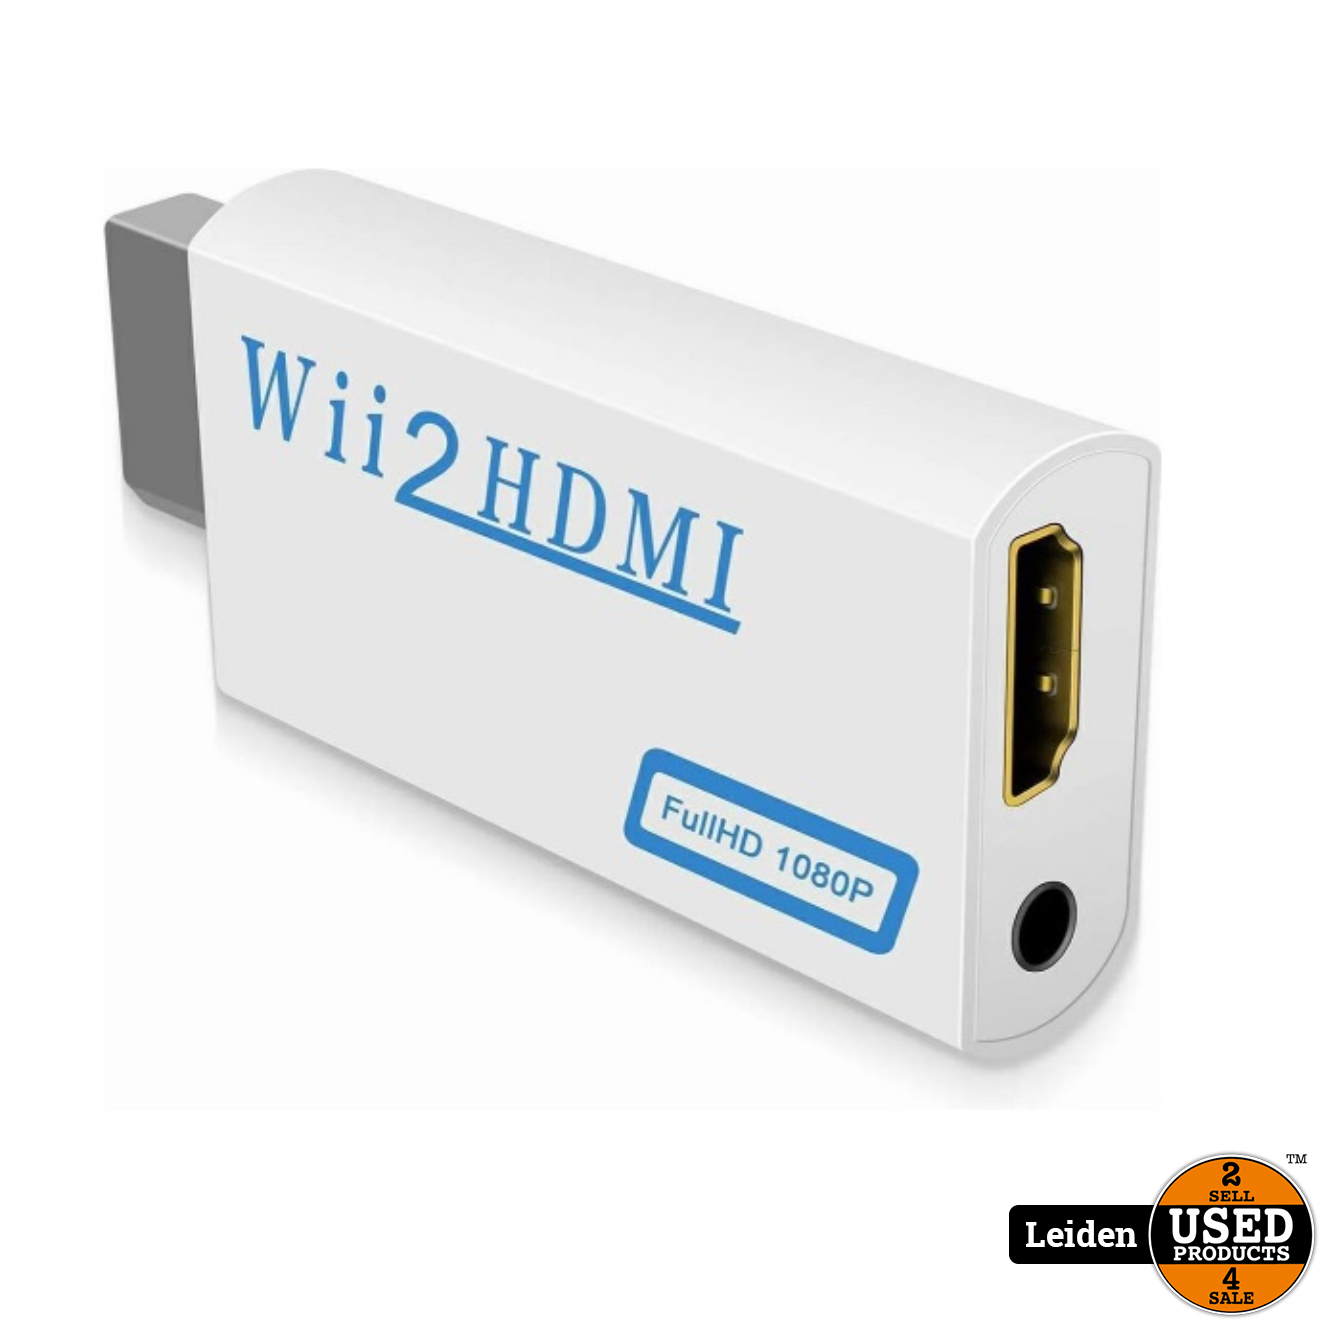 Gorgelen buik functie Wii naar HDMI Adapter Converter 1080p Full HD Kwaliteit - Wit - Used  Products Leiden